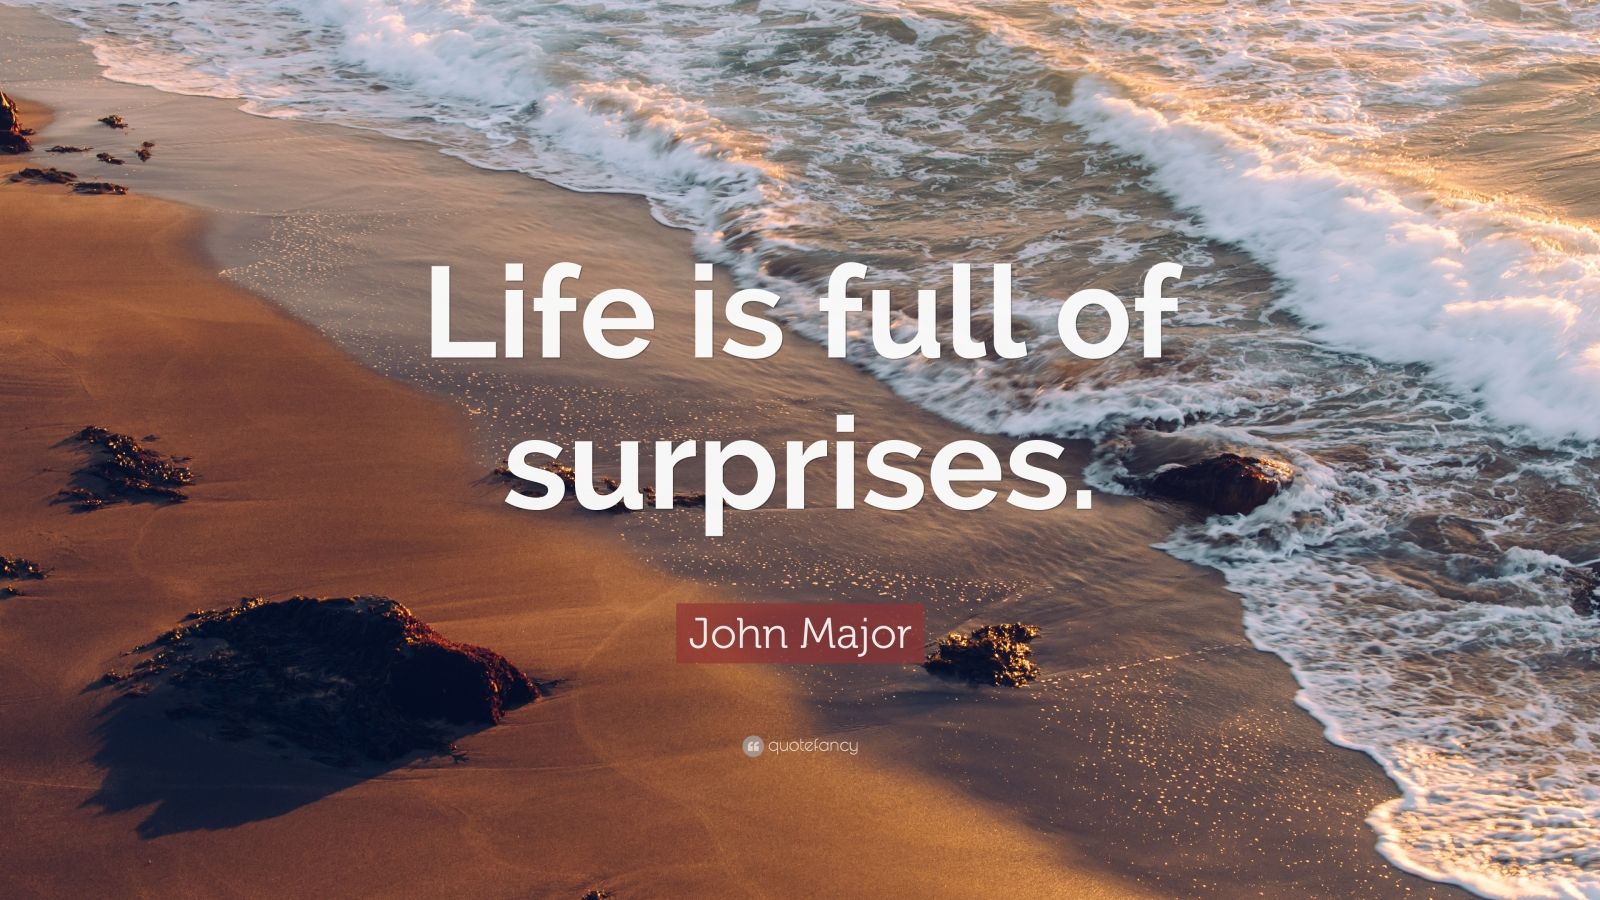 John Major Quote: “Life is full of surprises.” (9 wallpapers) - Quotefancy